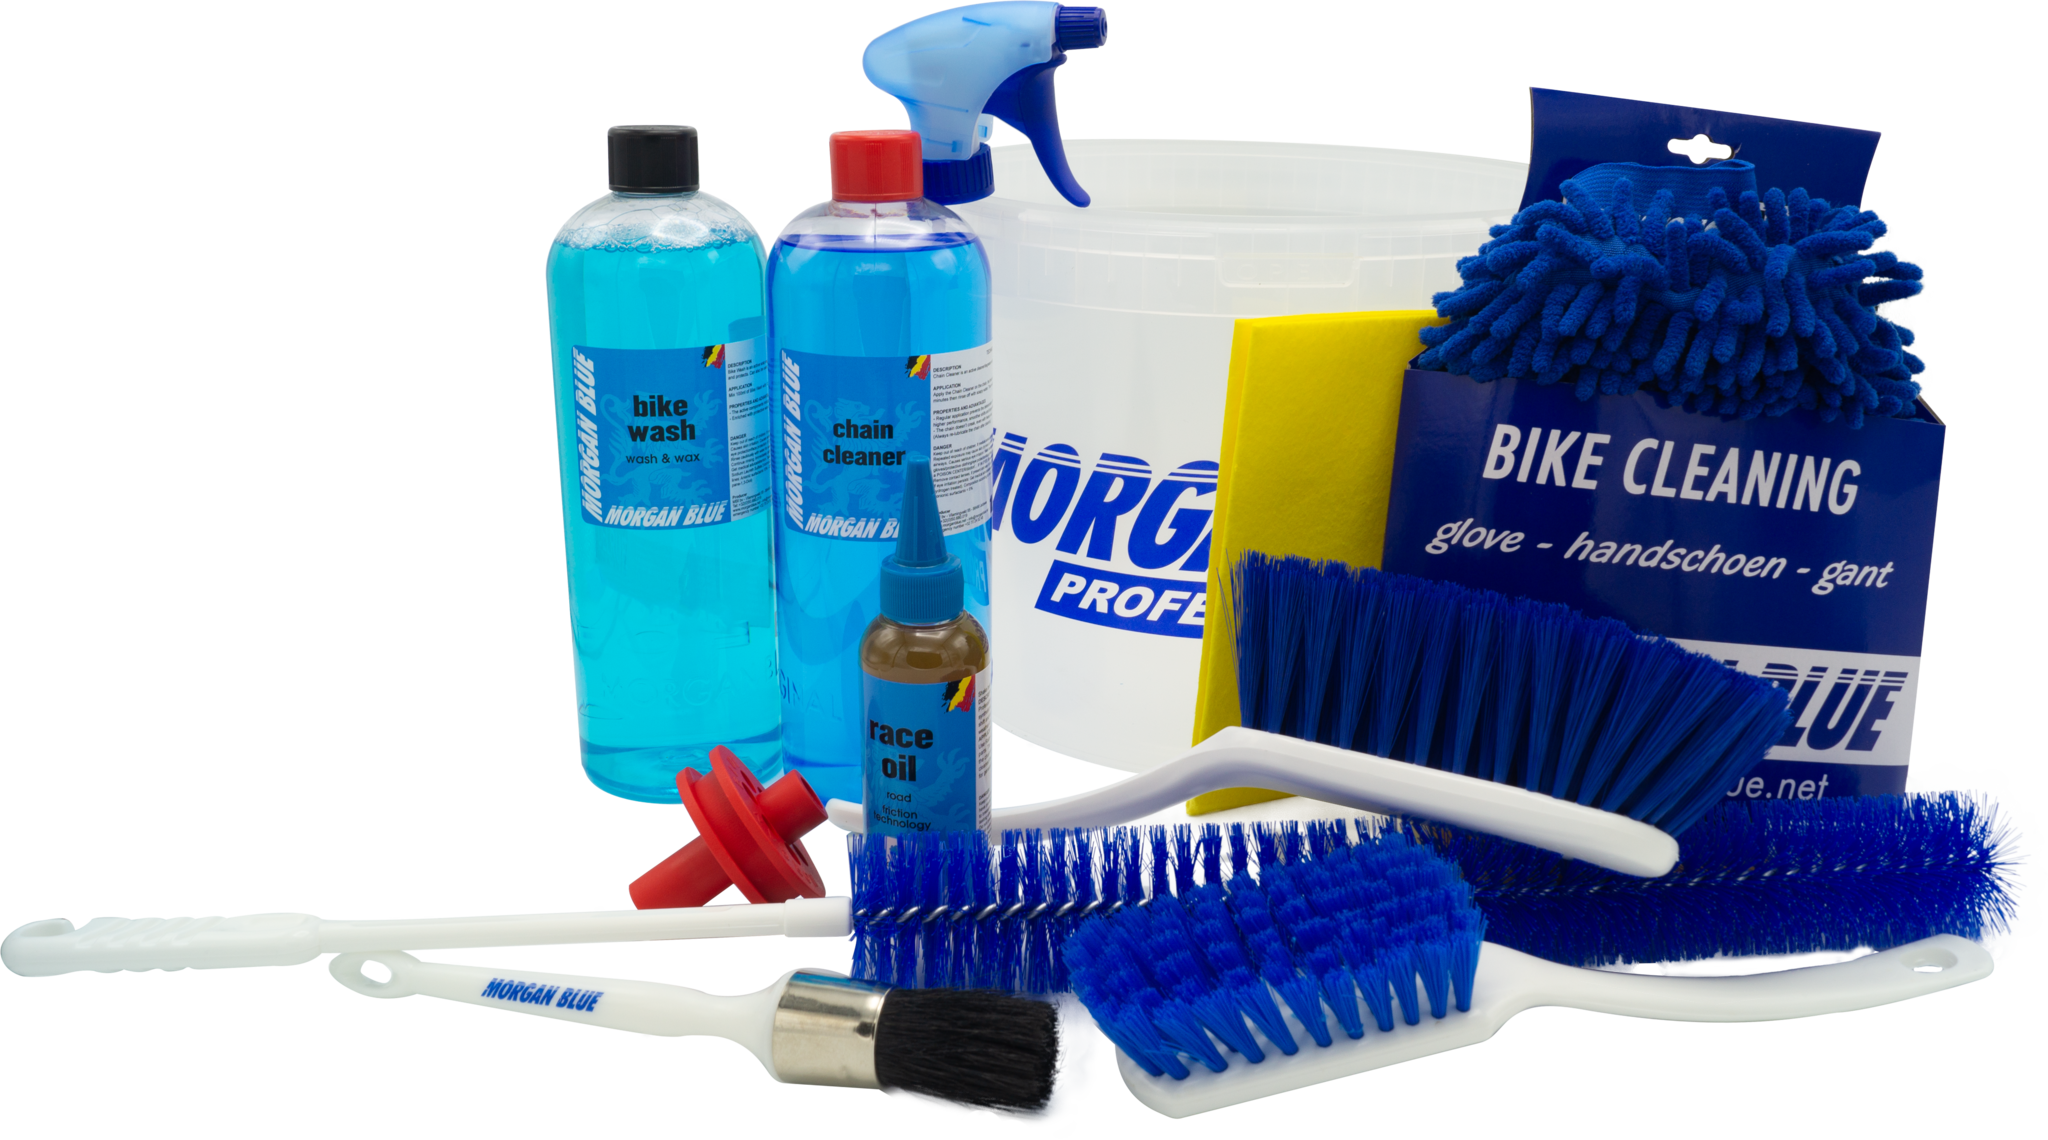 Morgan Blue Bio Bike Cleaner